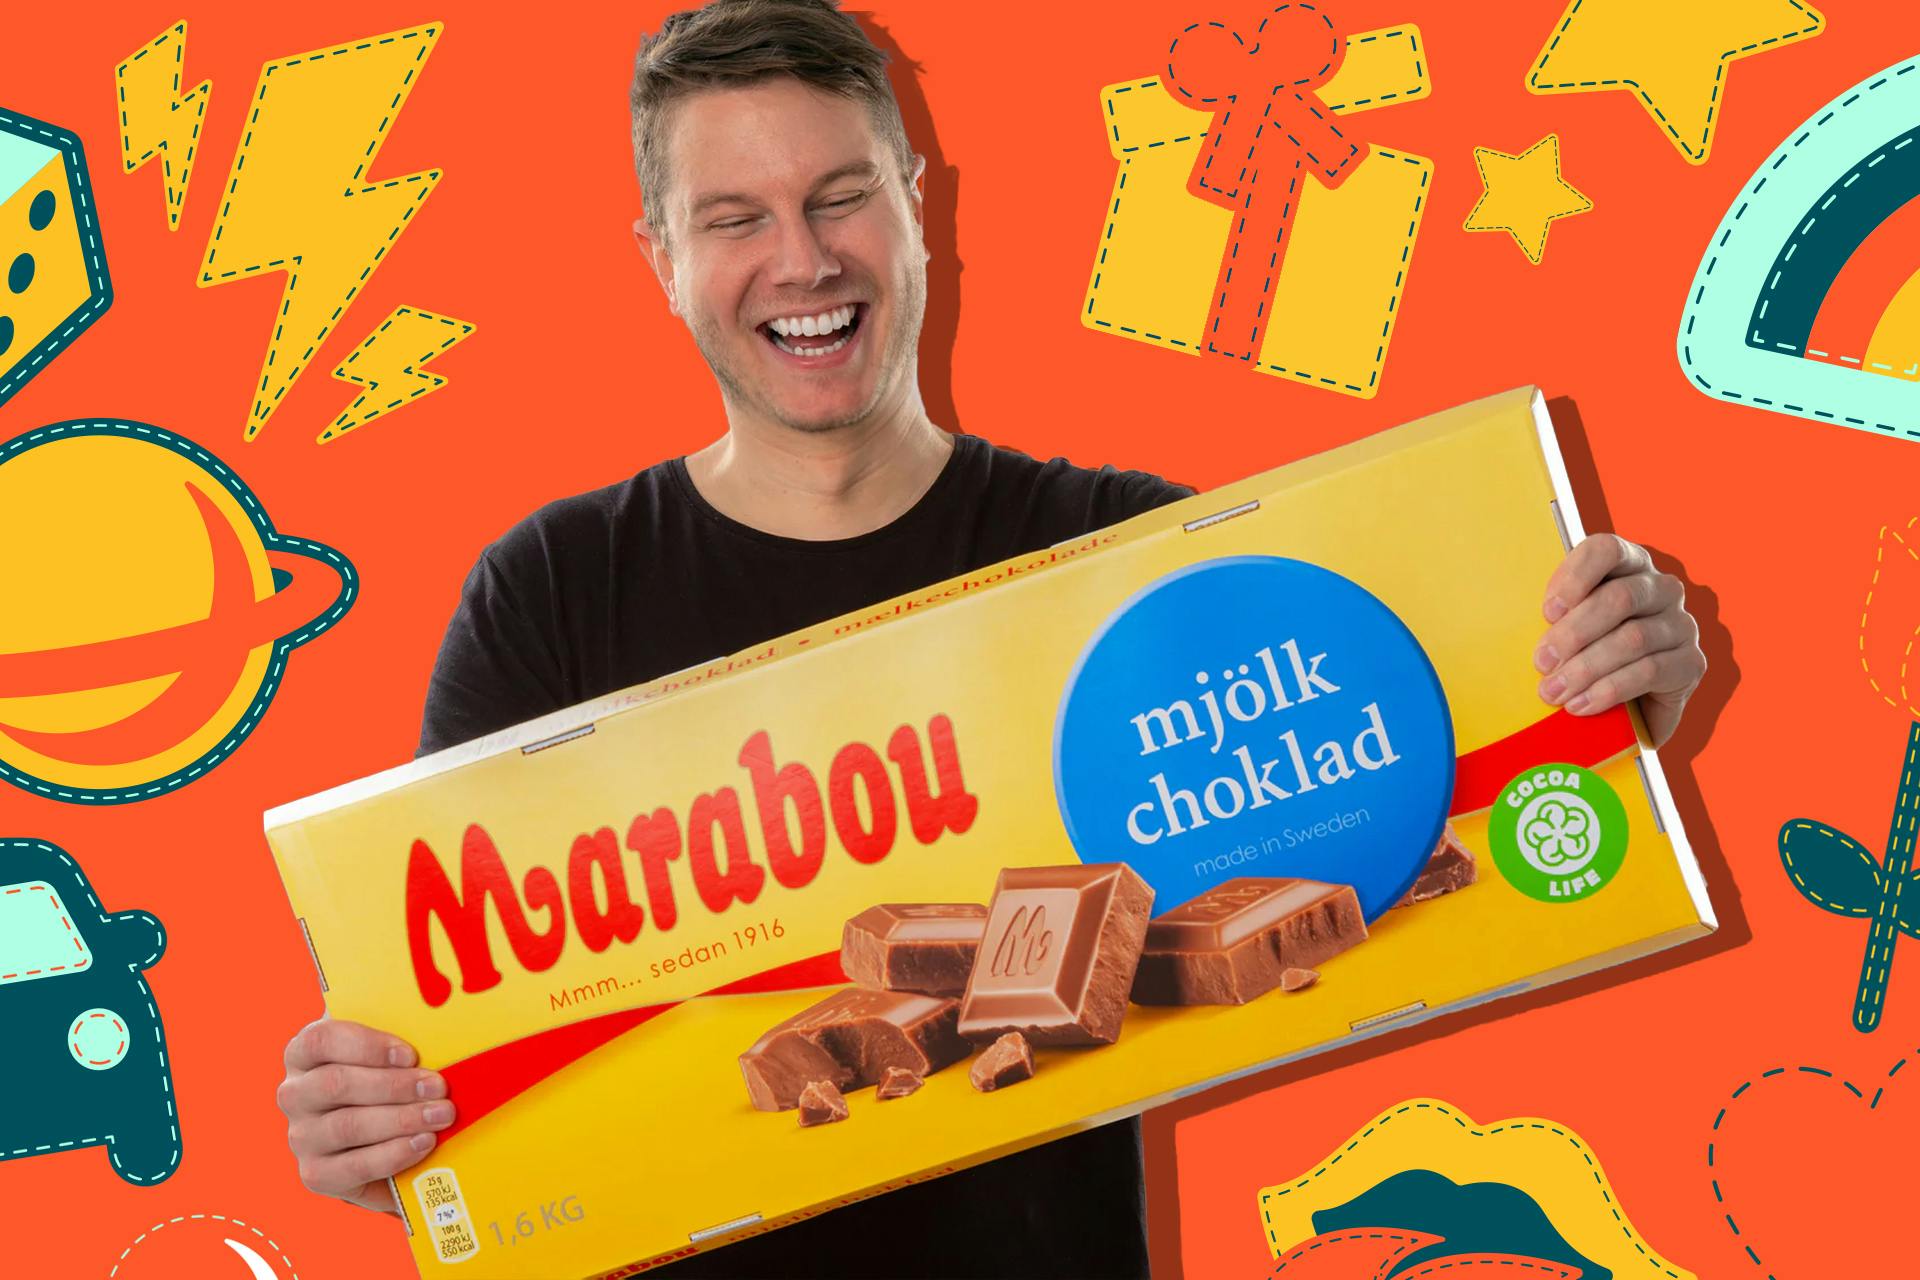 Gigantische Marabou-Schokolade